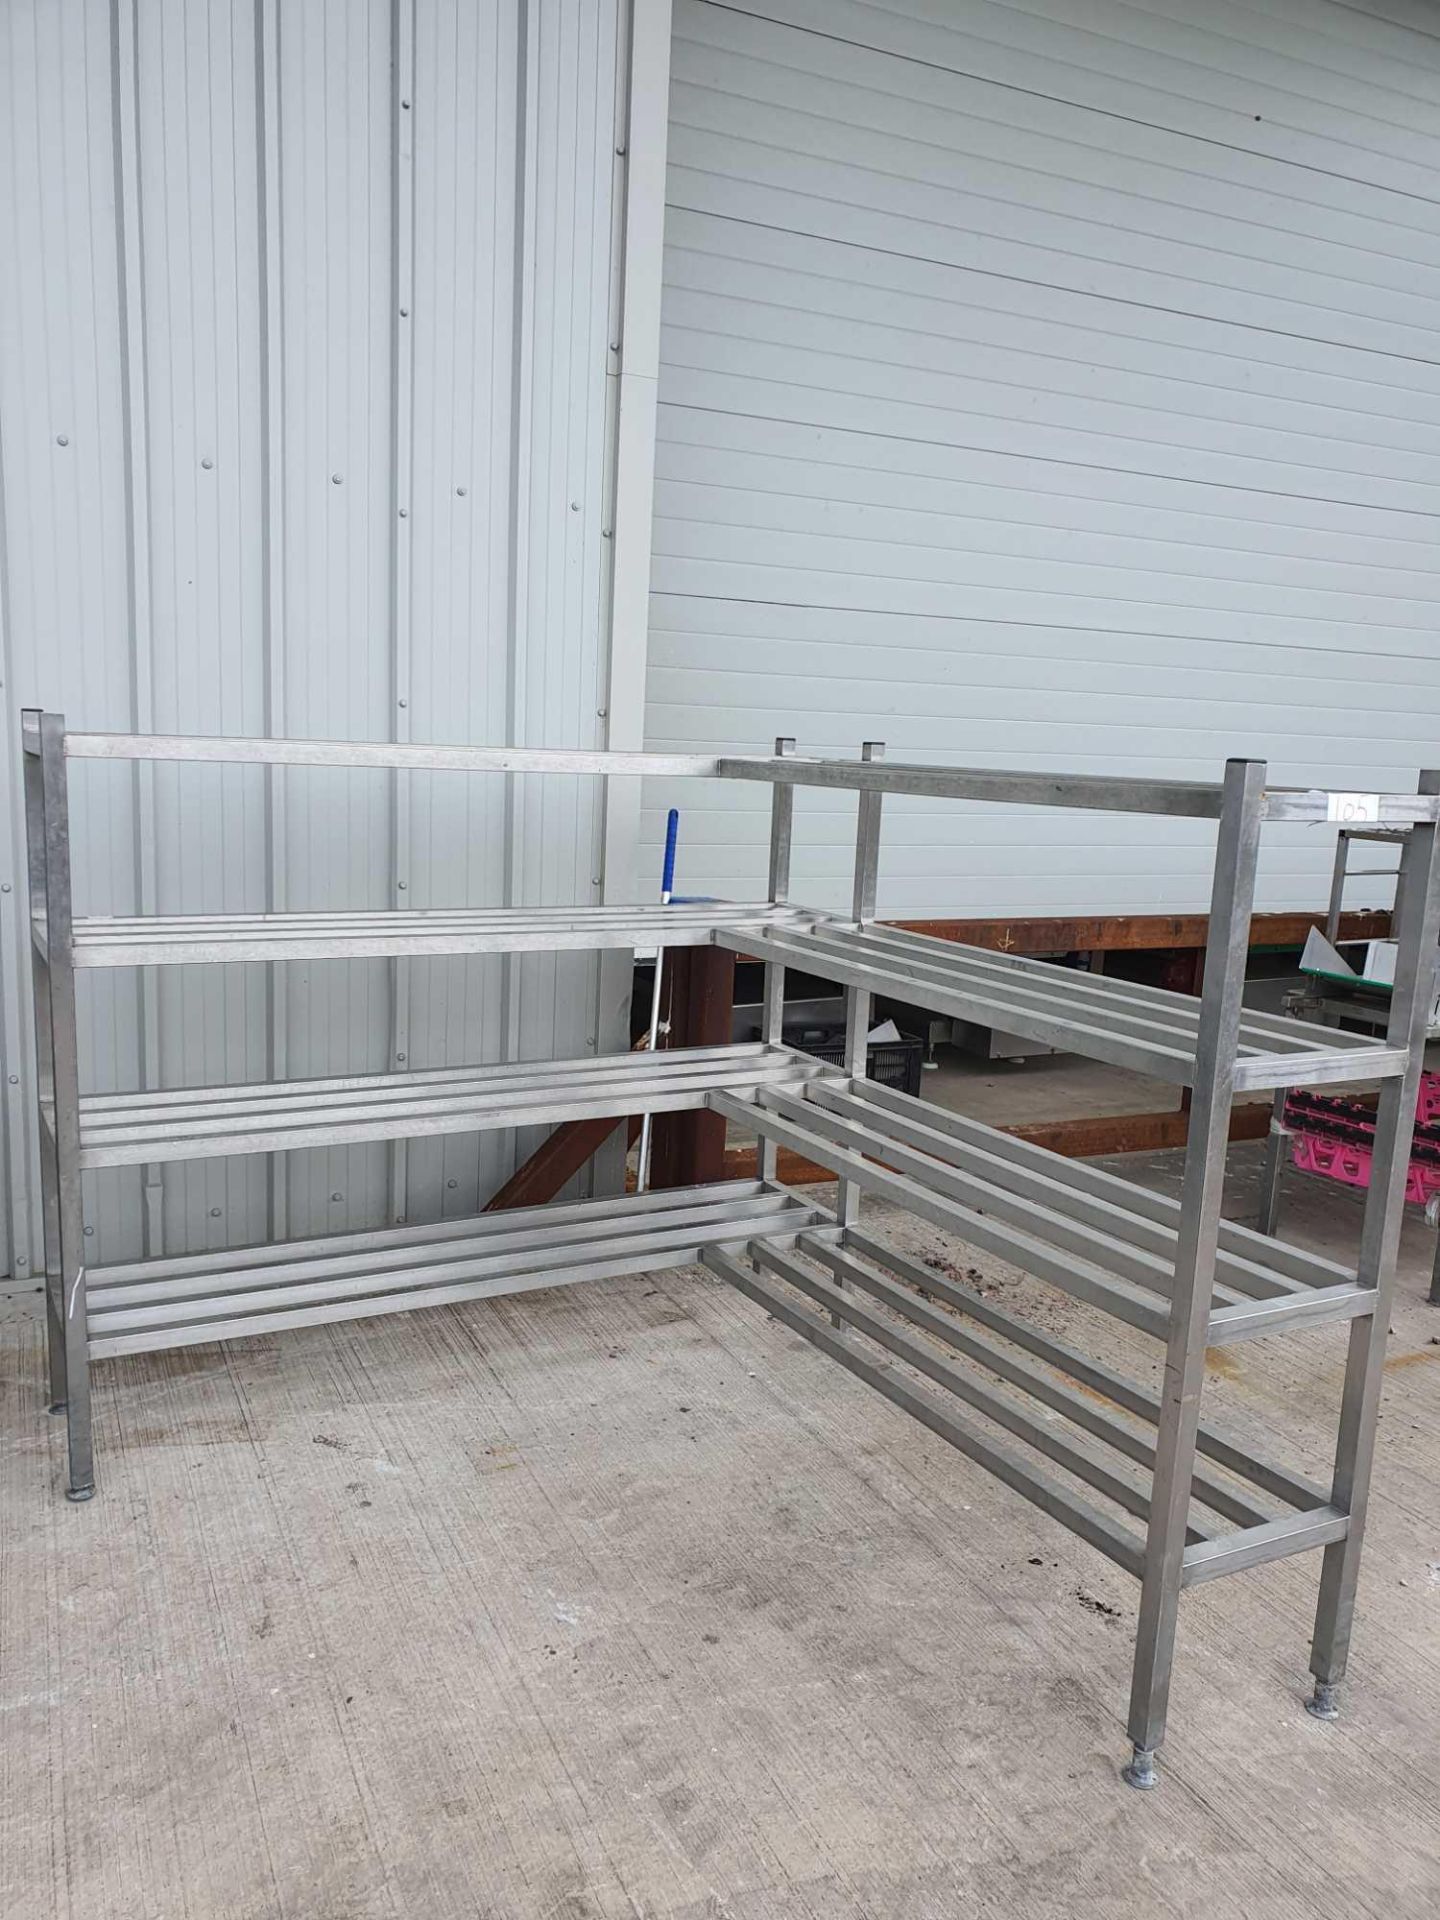 Stainless steel 4 tier corner shelve unit - Image 2 of 2